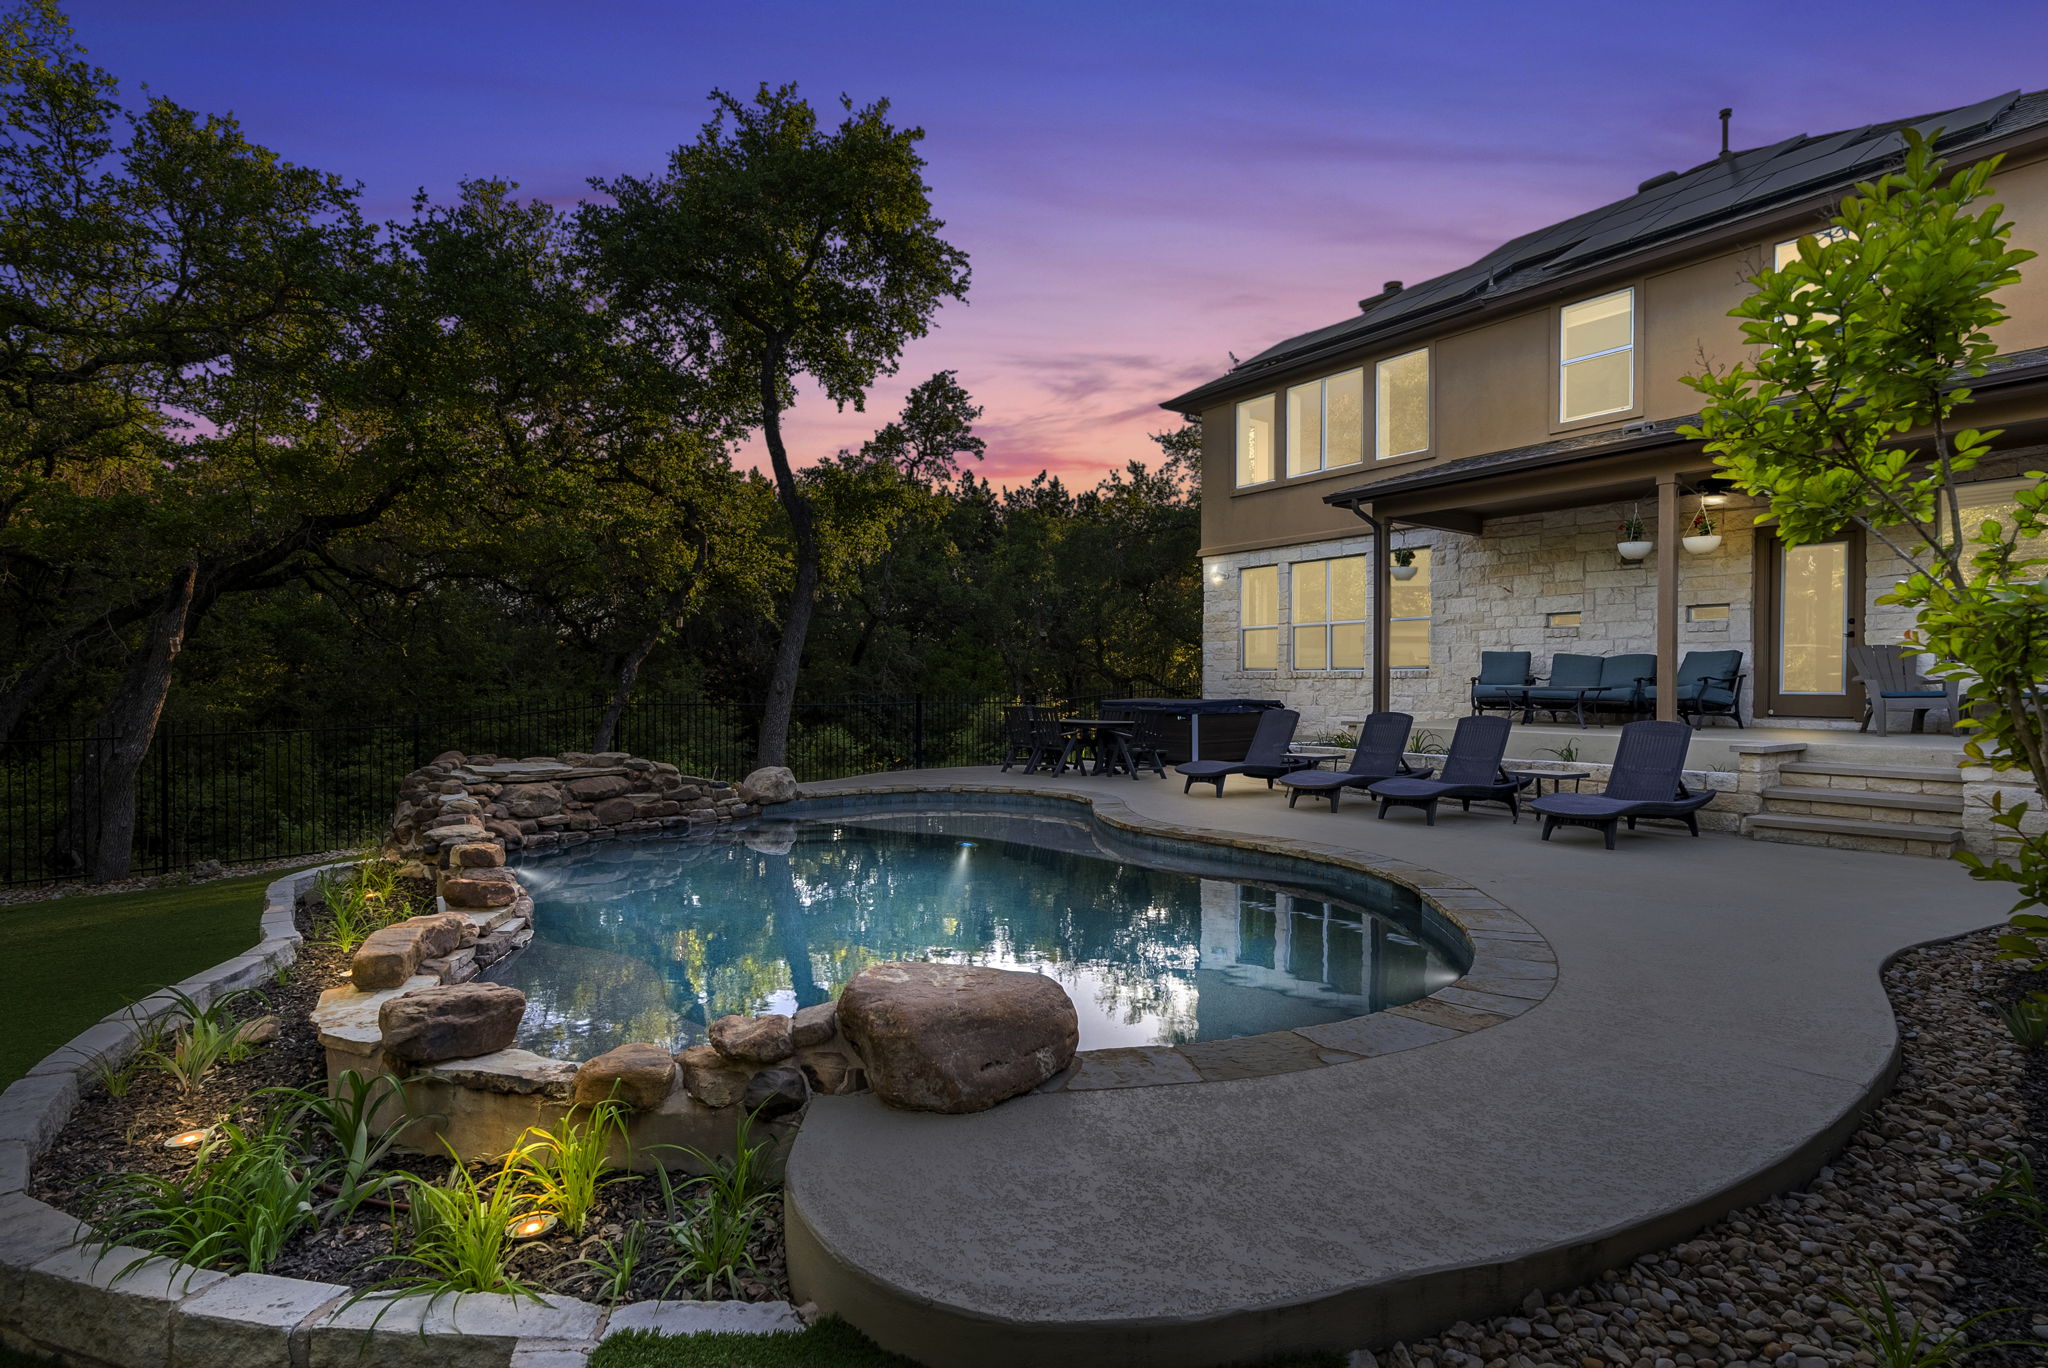 Imagine Sunset Evenings from your amazing backyard